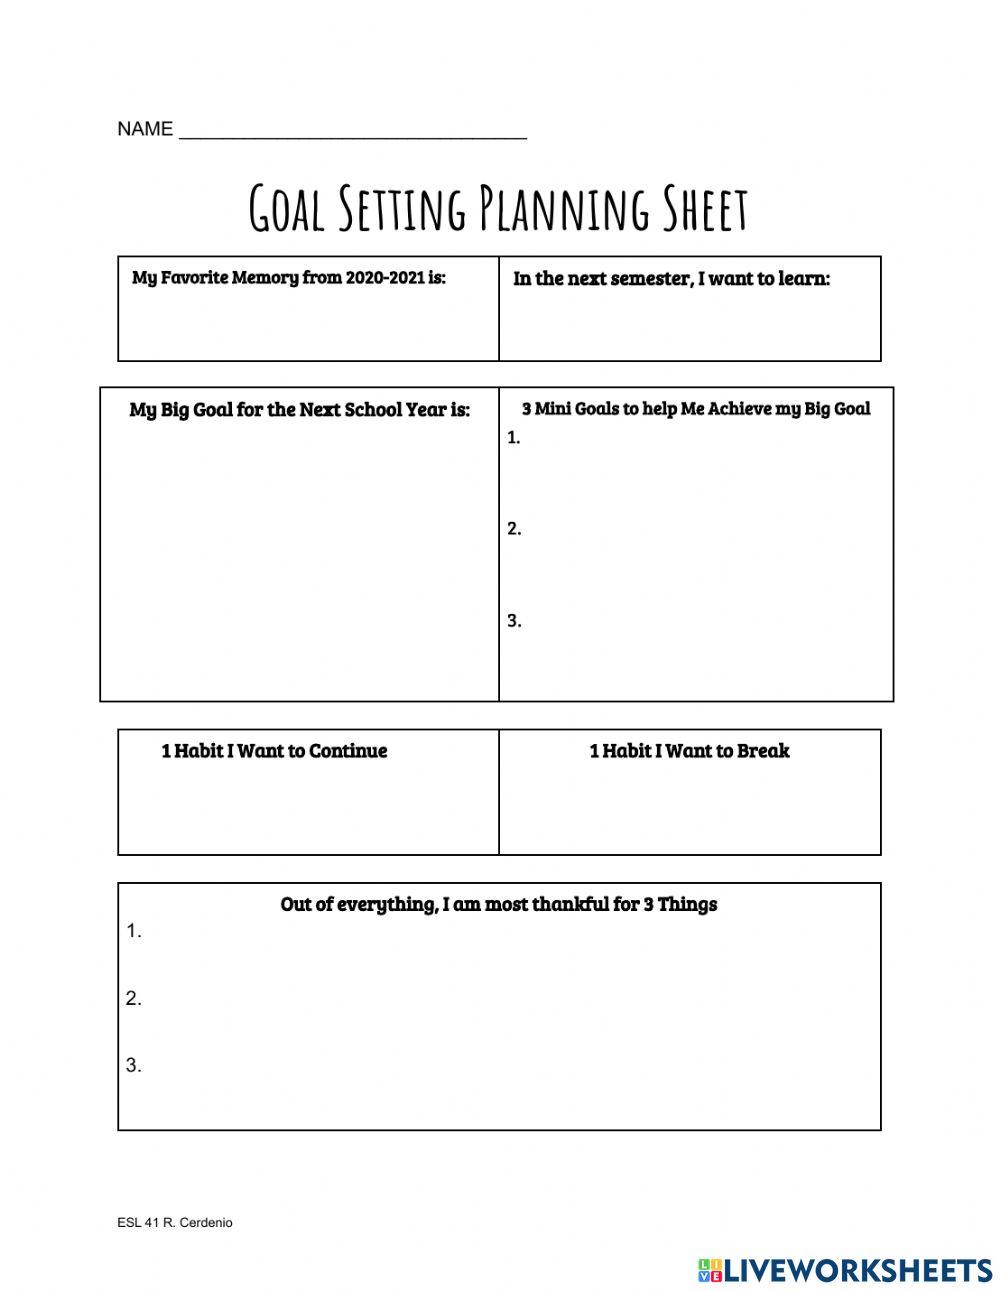 Goal Setting Planning Sheet